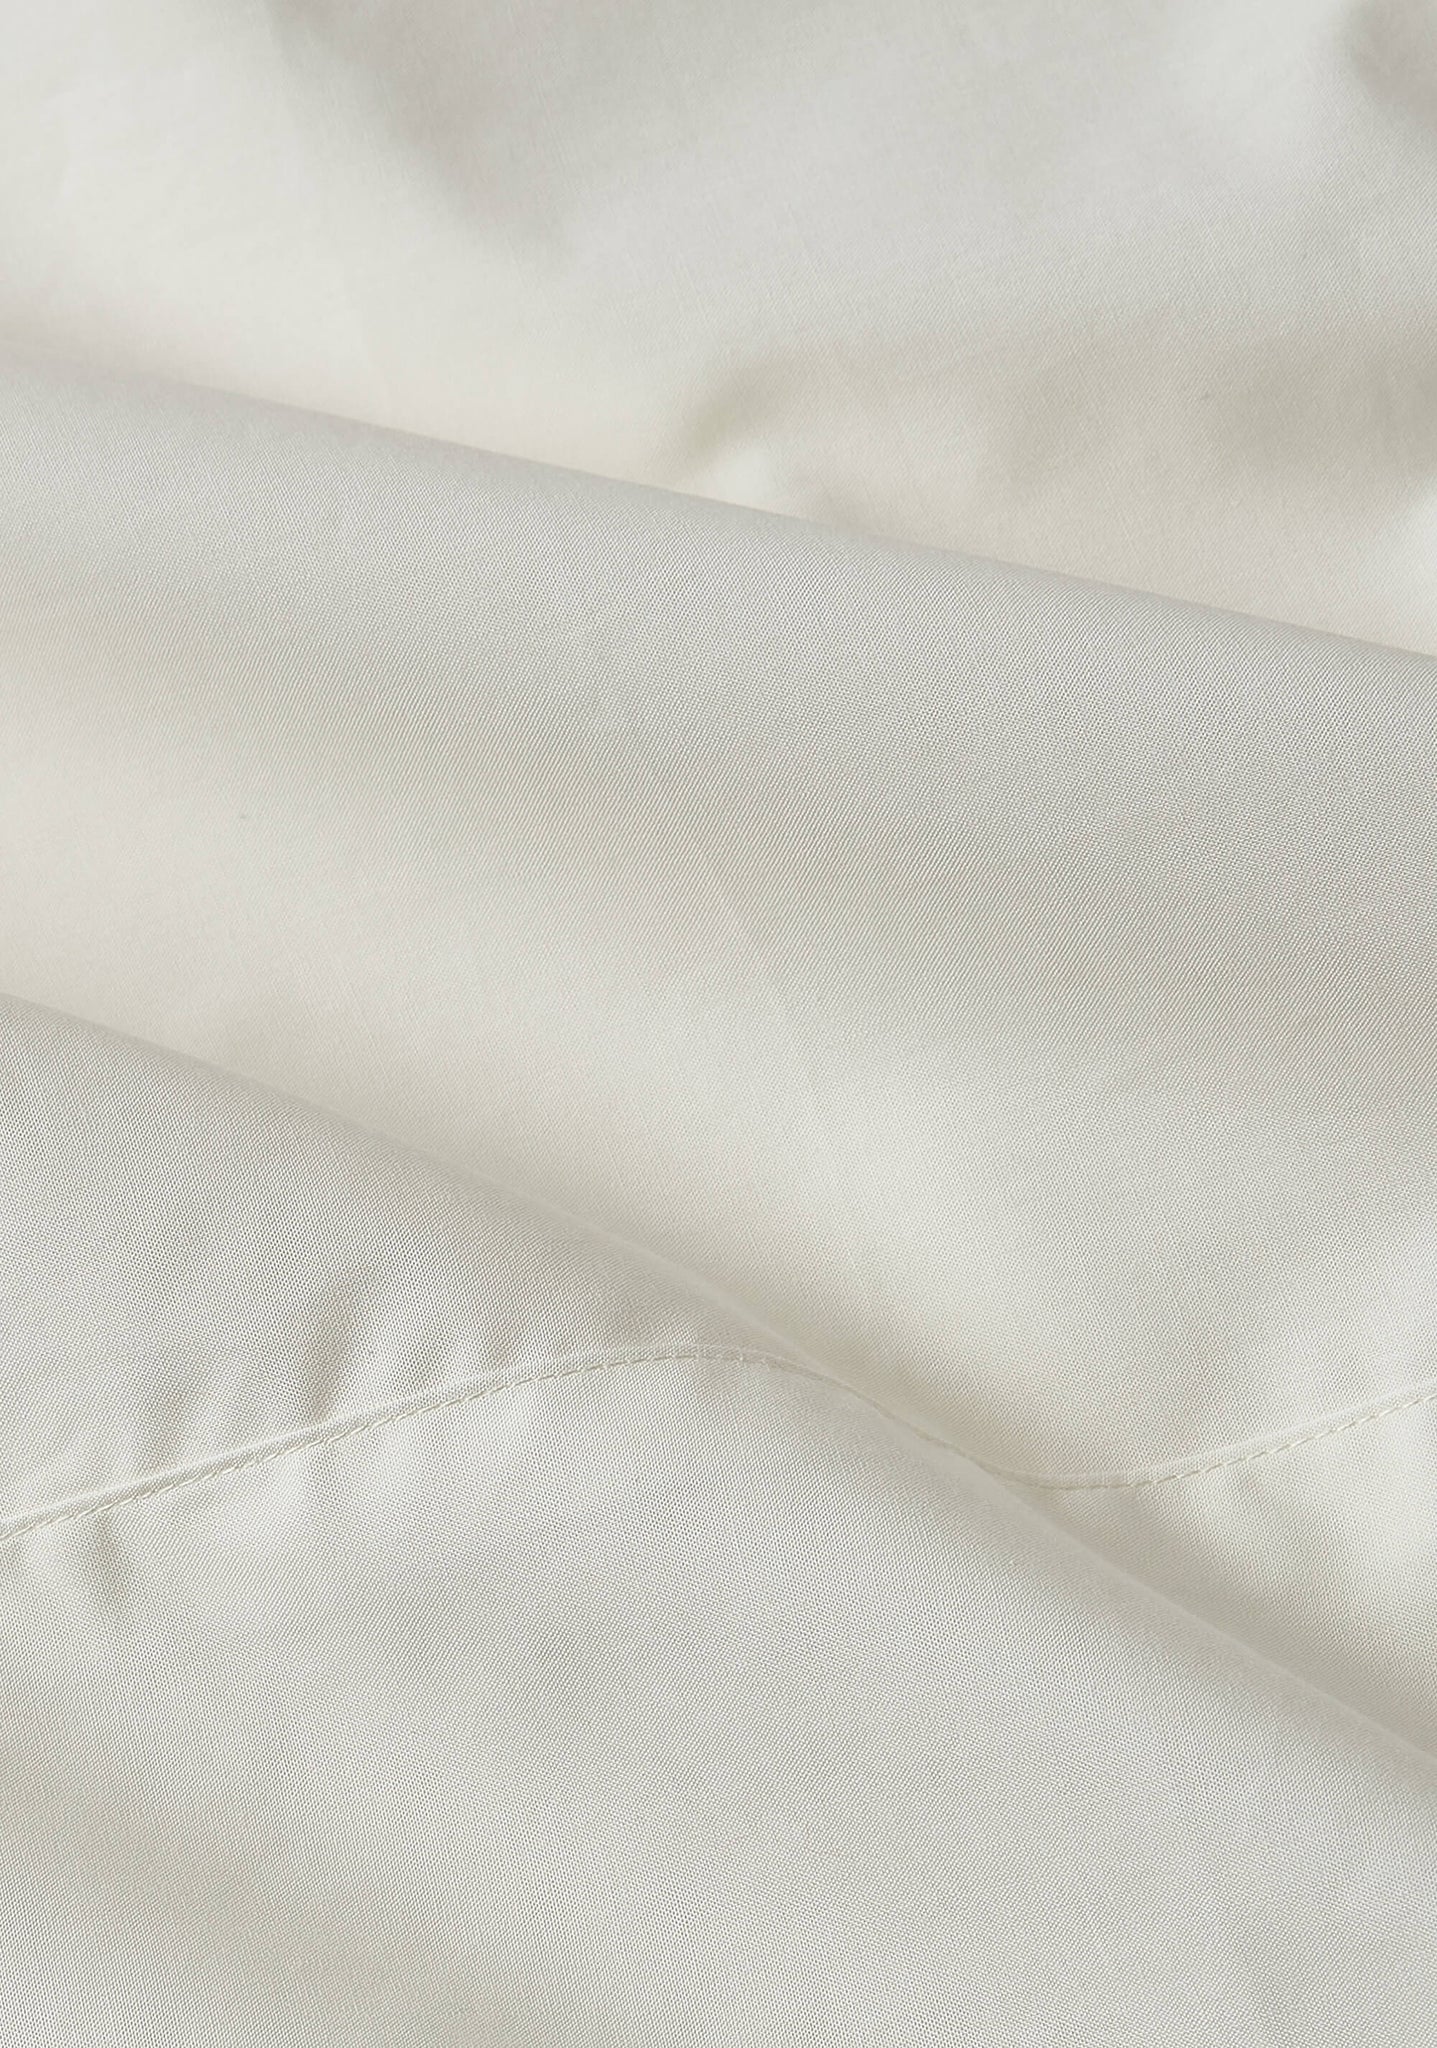 Percale Flat Sheet Set - 100% Egyptian Cotton